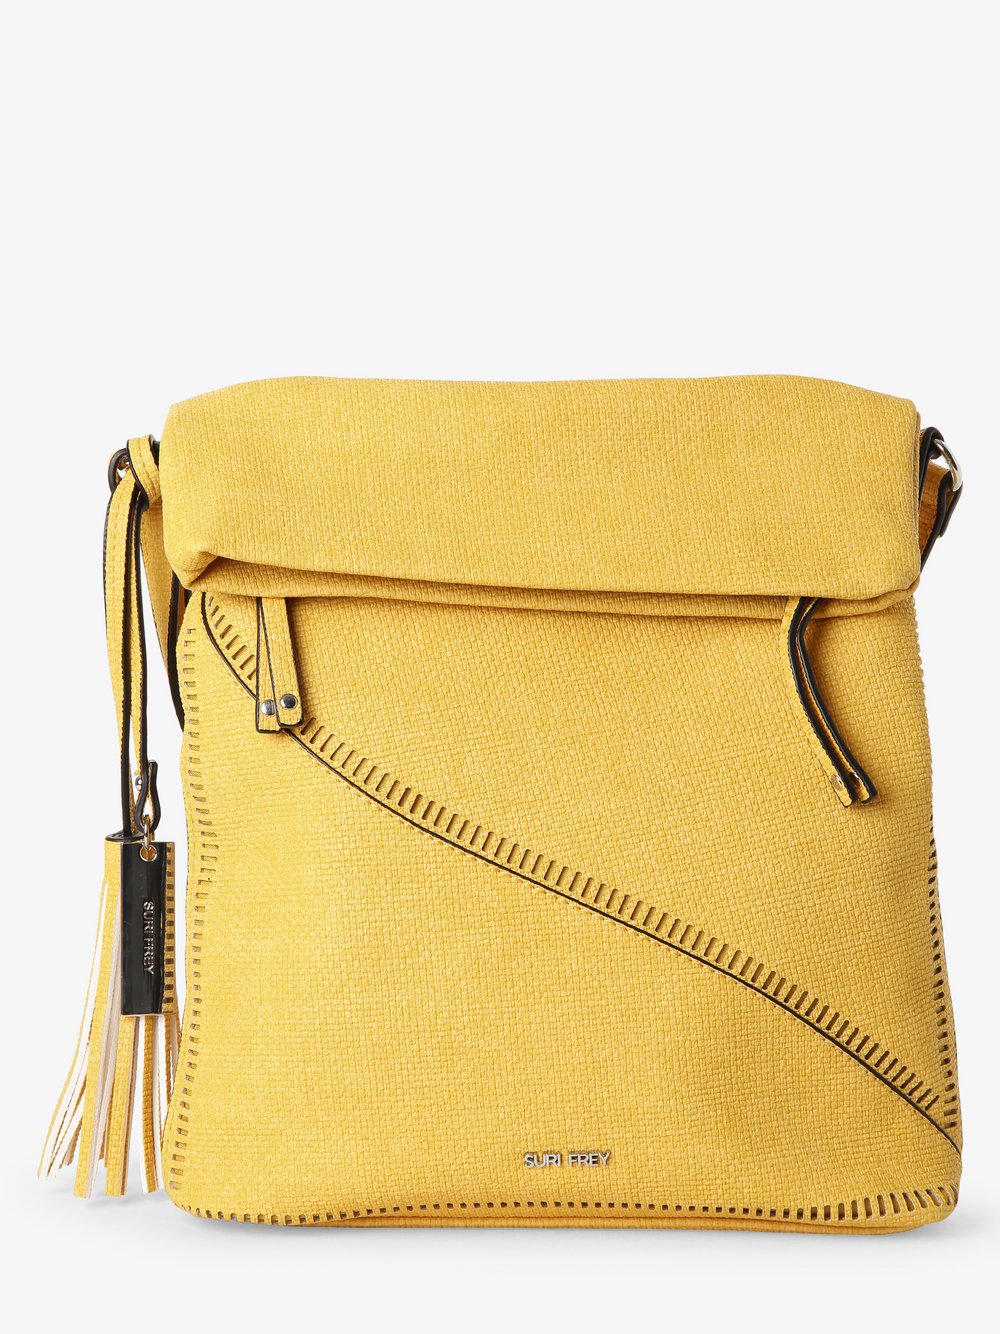 Suri Frey - Damska torebka na ramię – Tilly, żółty